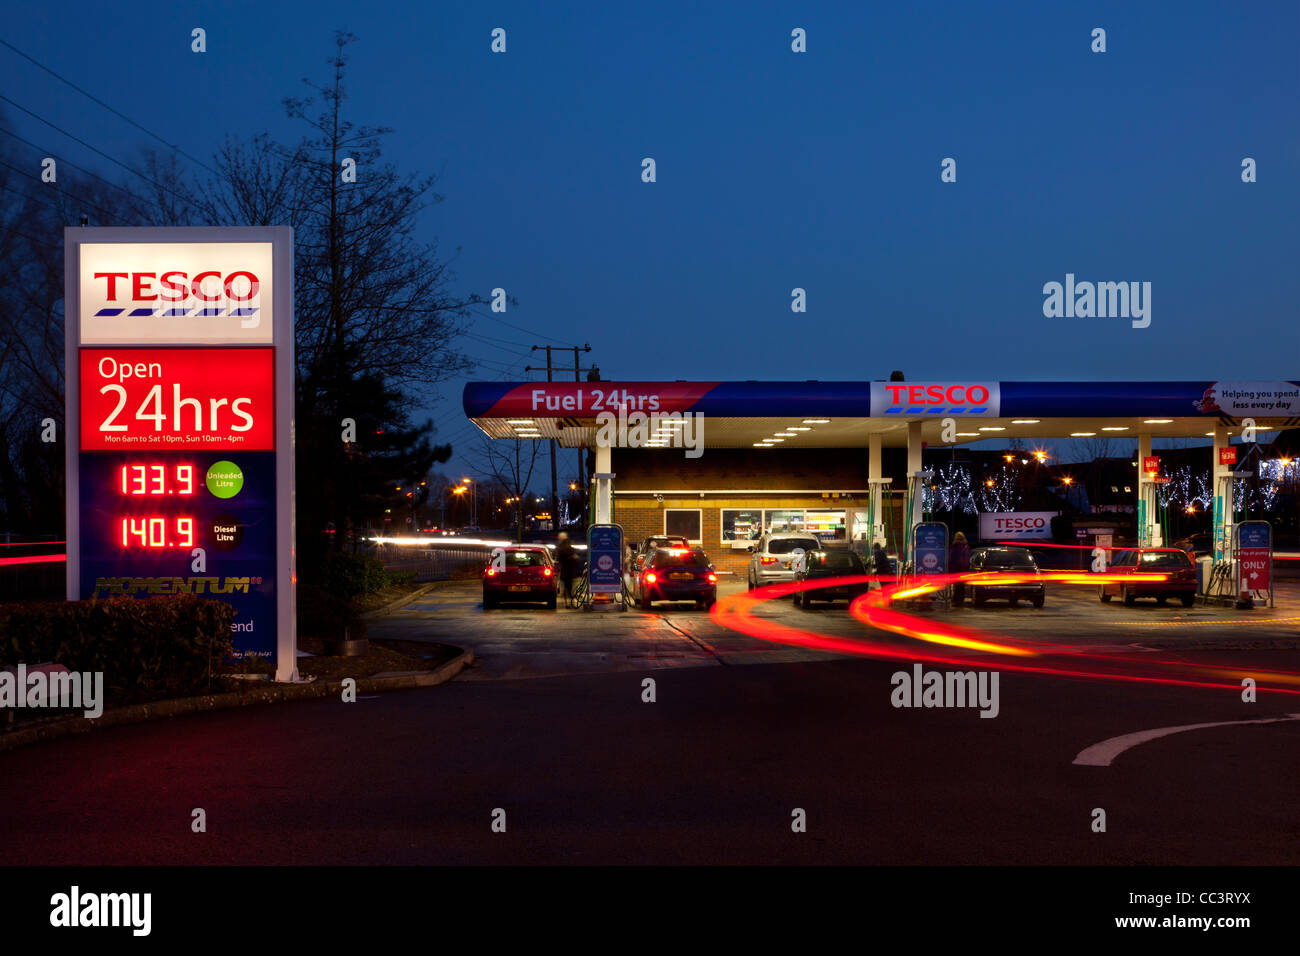 Tesco fuel petrol garage filling station at night Stock Photo